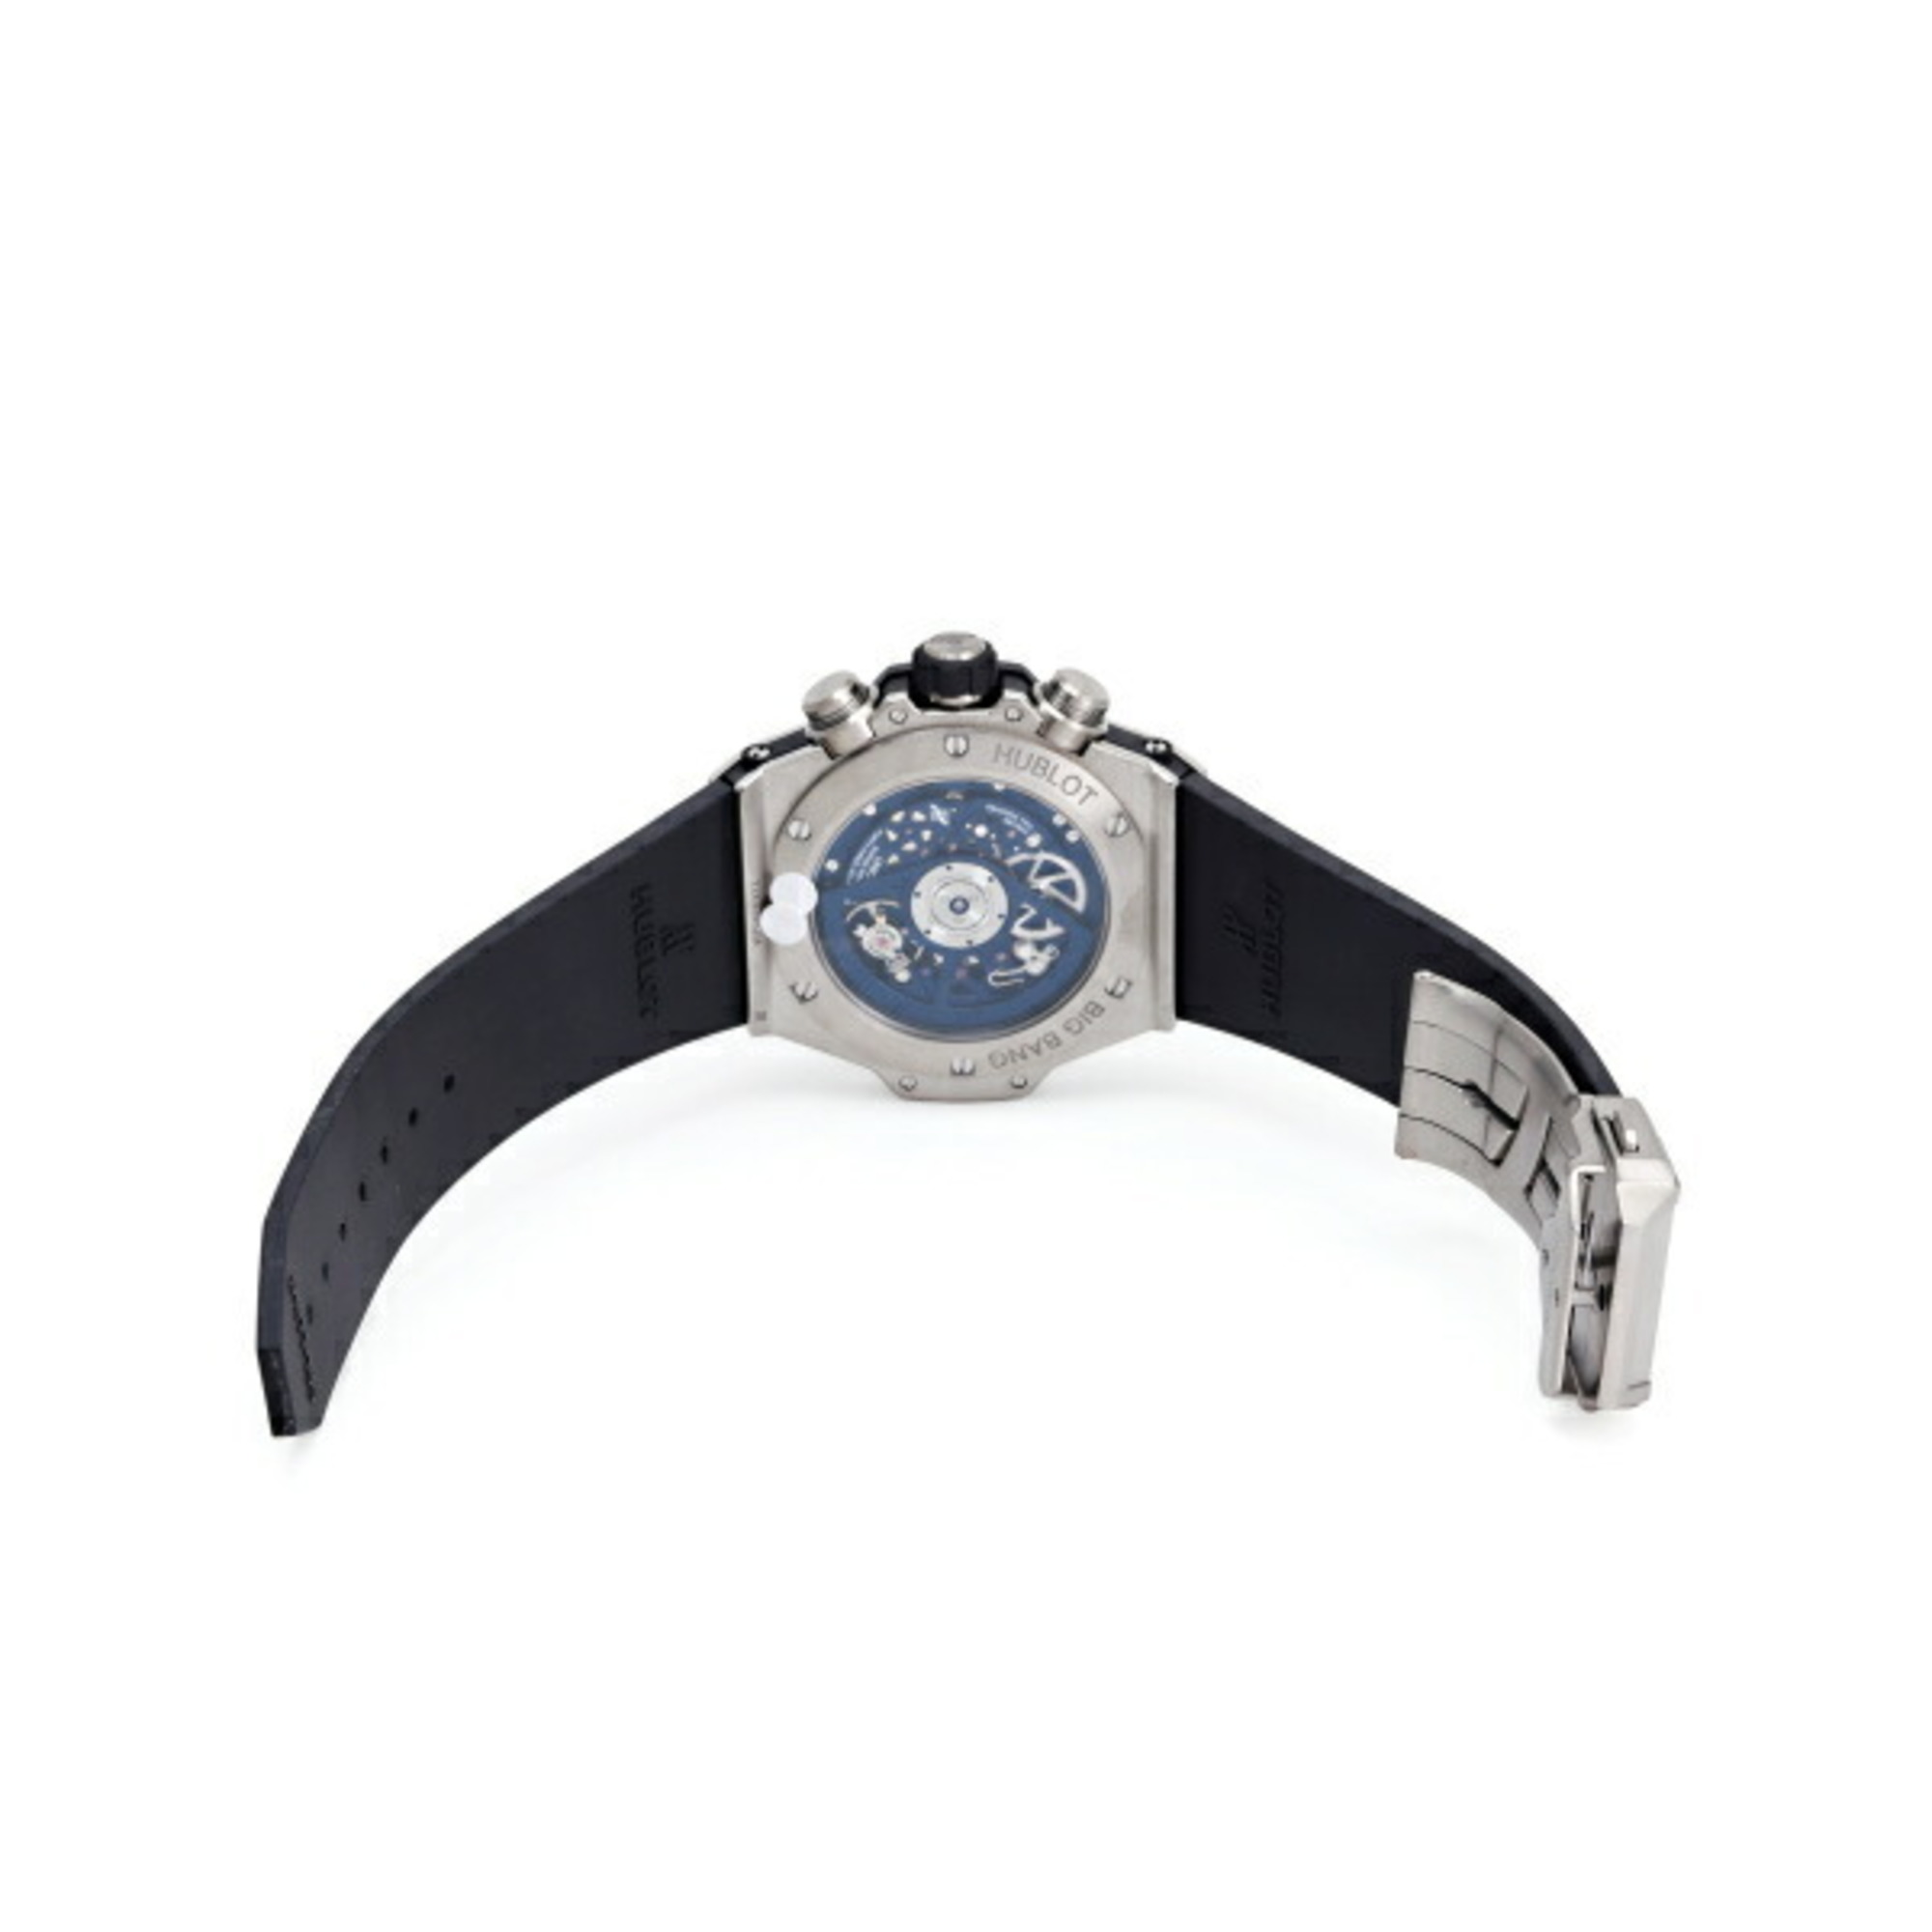 HUBLOT Big Bang Unico Titanium Blue Ceramic 421.NL.5170.RX Silver Dial Watch Men's